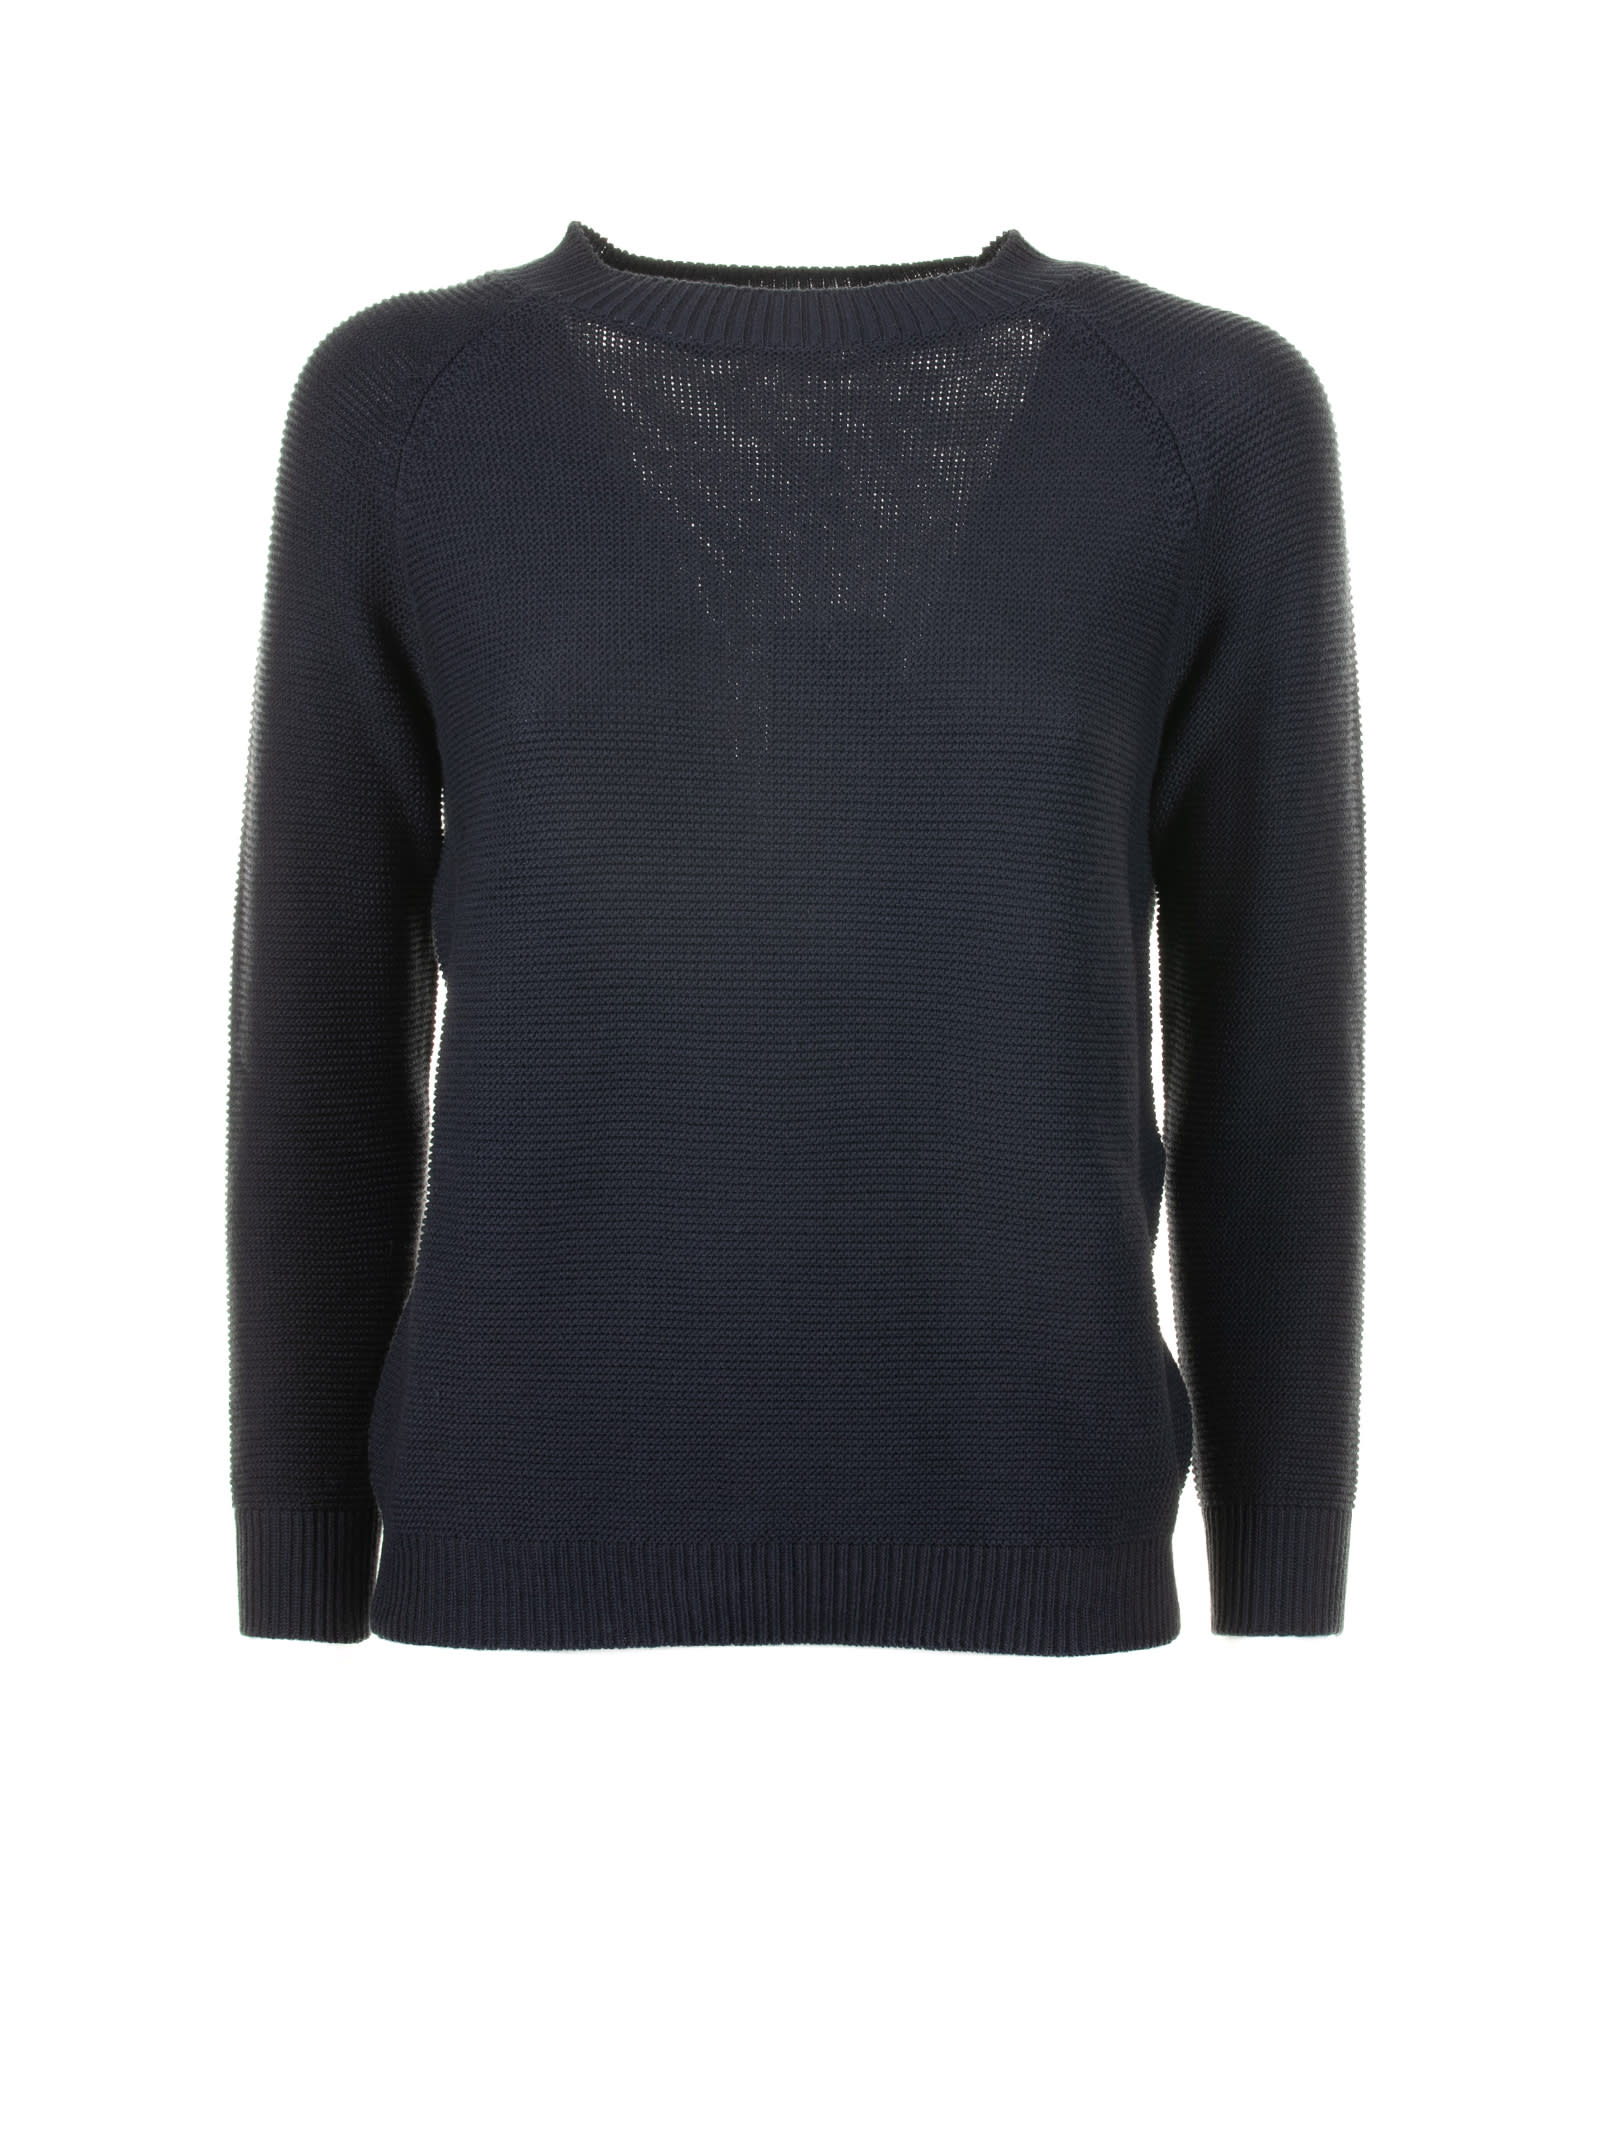 Soft Navy Blue Cotton Sweater